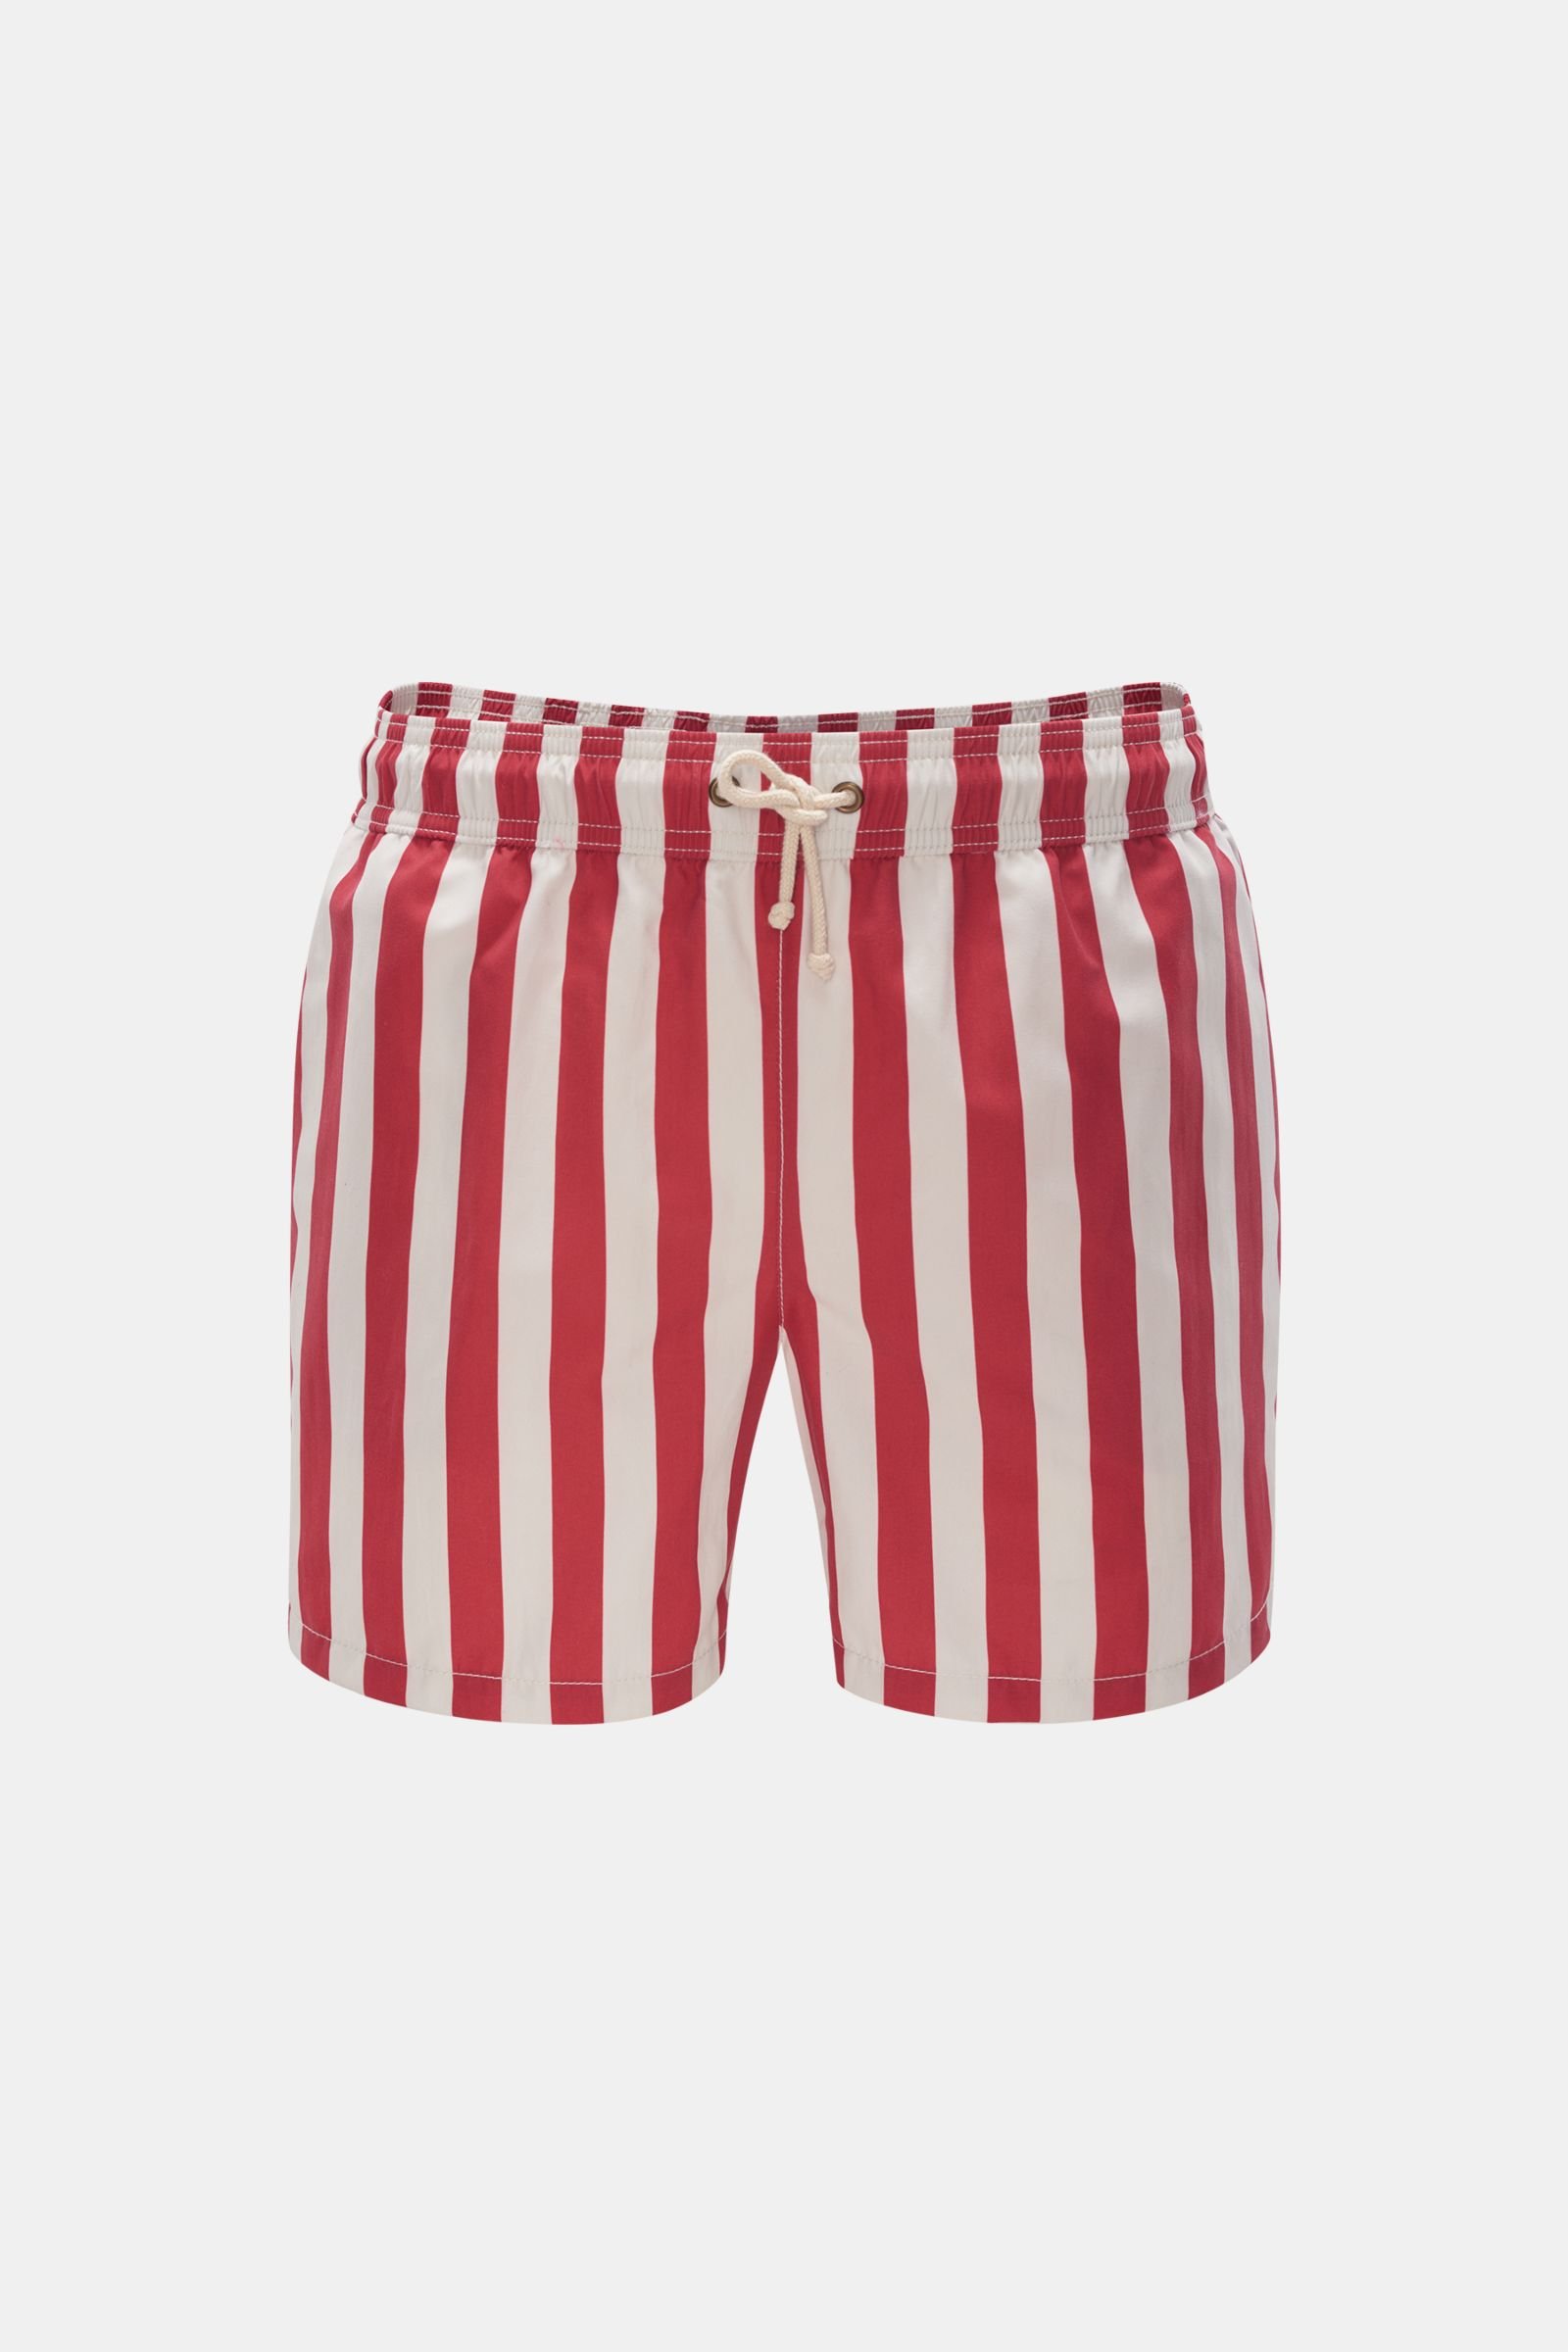 Swim shorts 'Paraggi' red/white striped